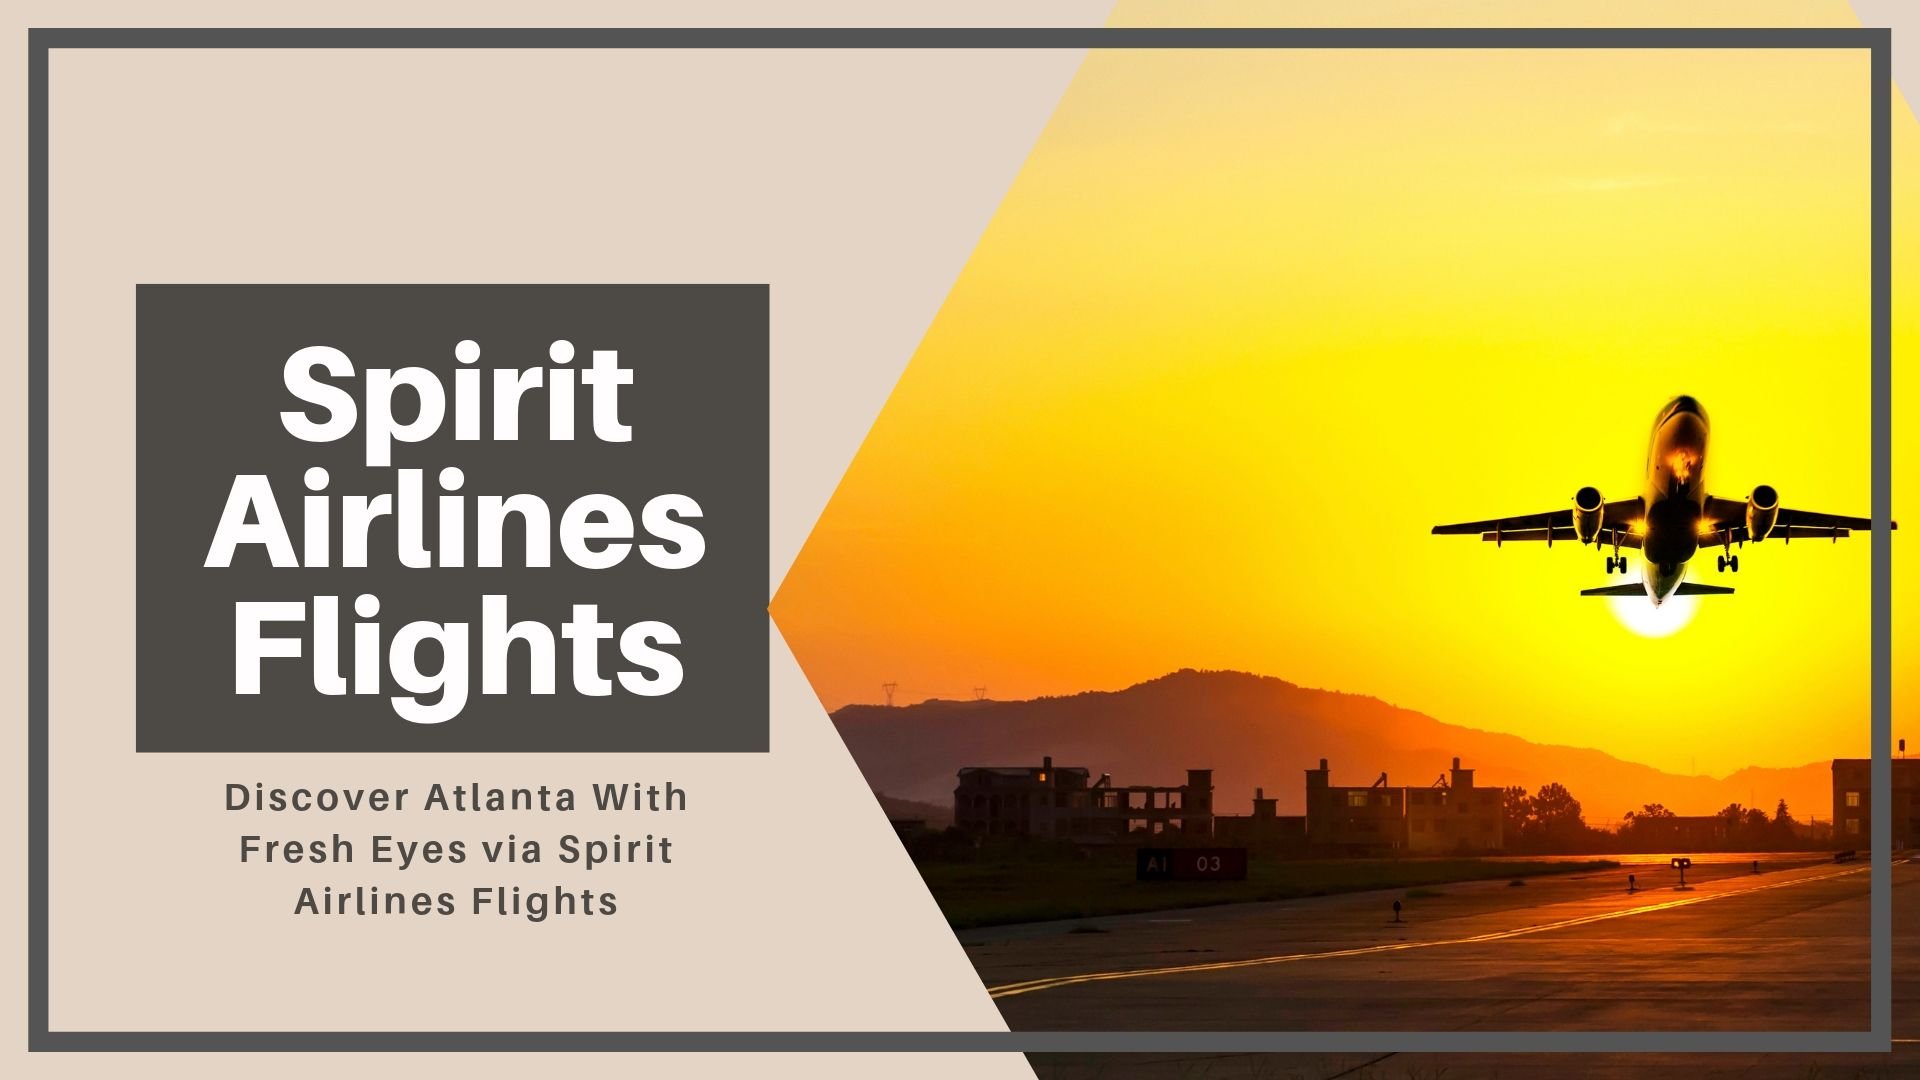 Discover Atlanta With Fresh Eyes via Spirit Airlines Flights